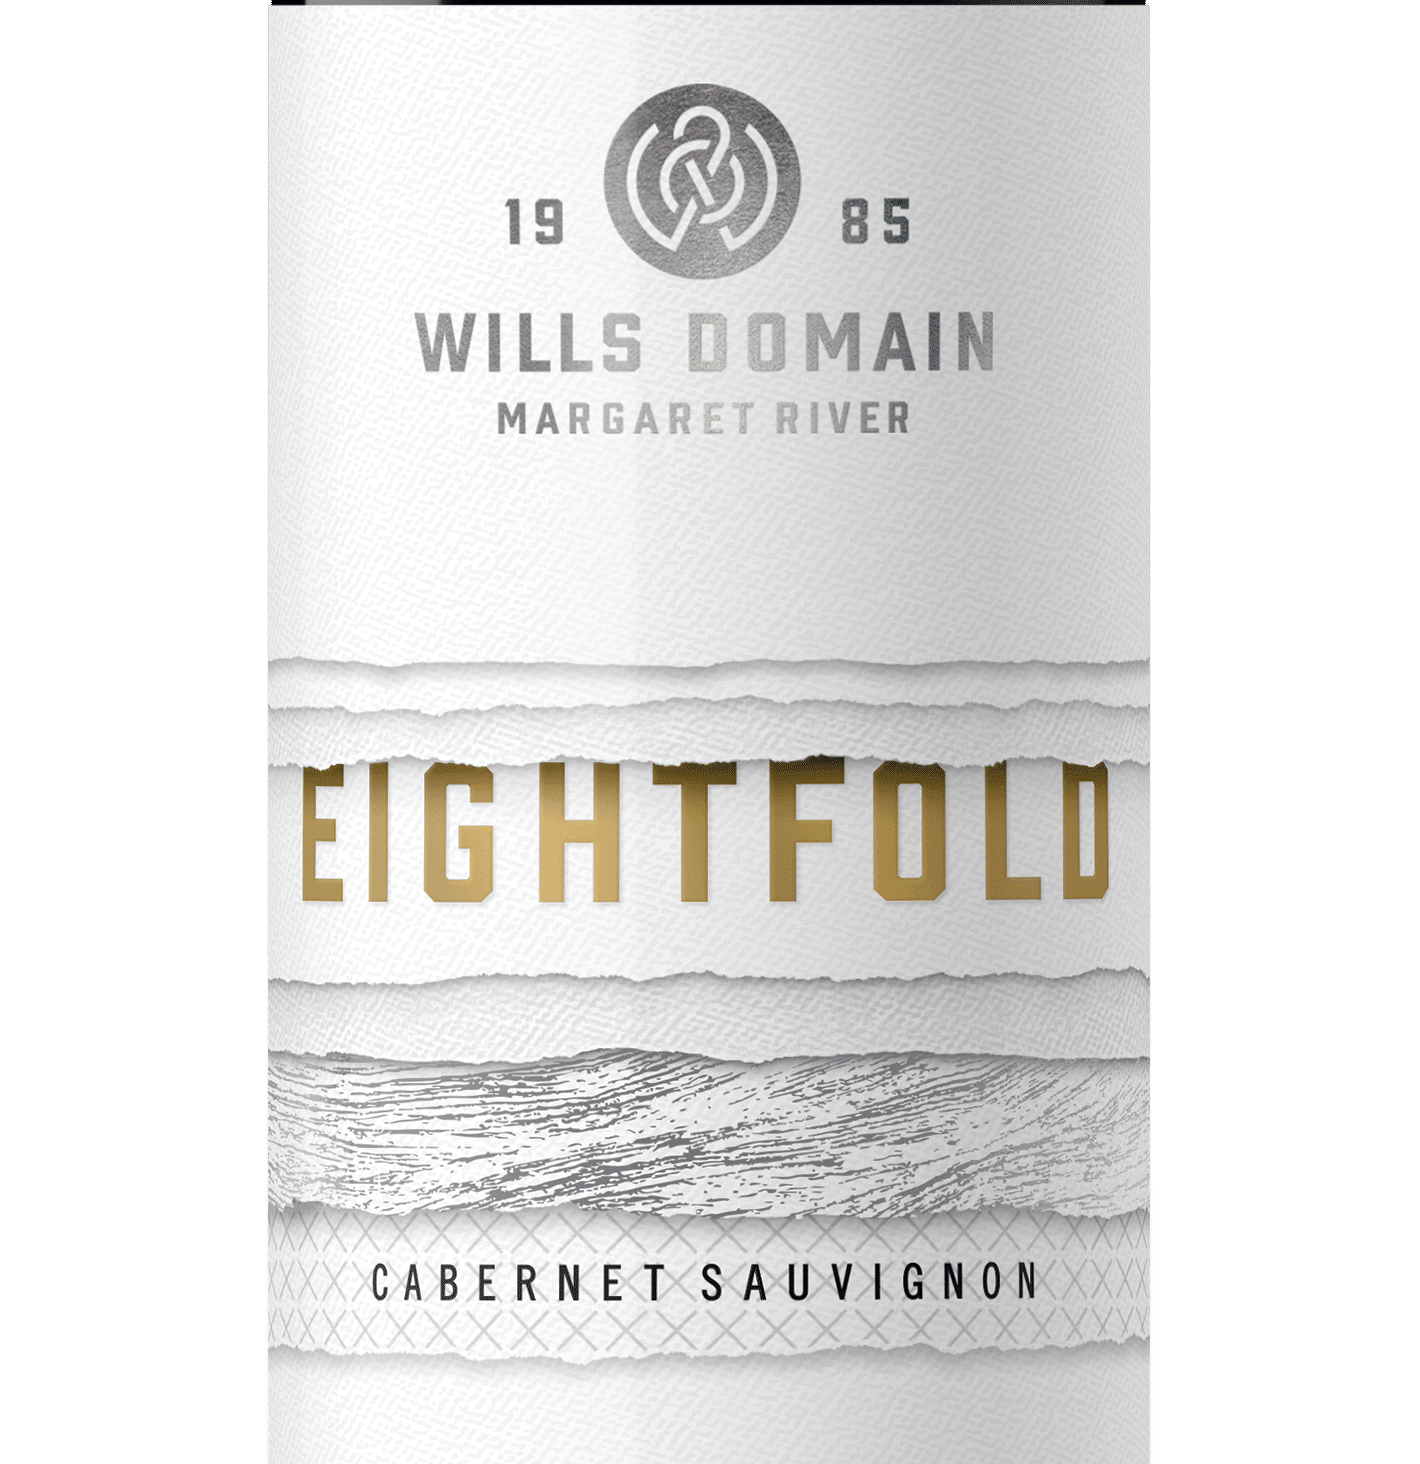 Wills Domain Eightfold Cabernet Sauvignon 2021